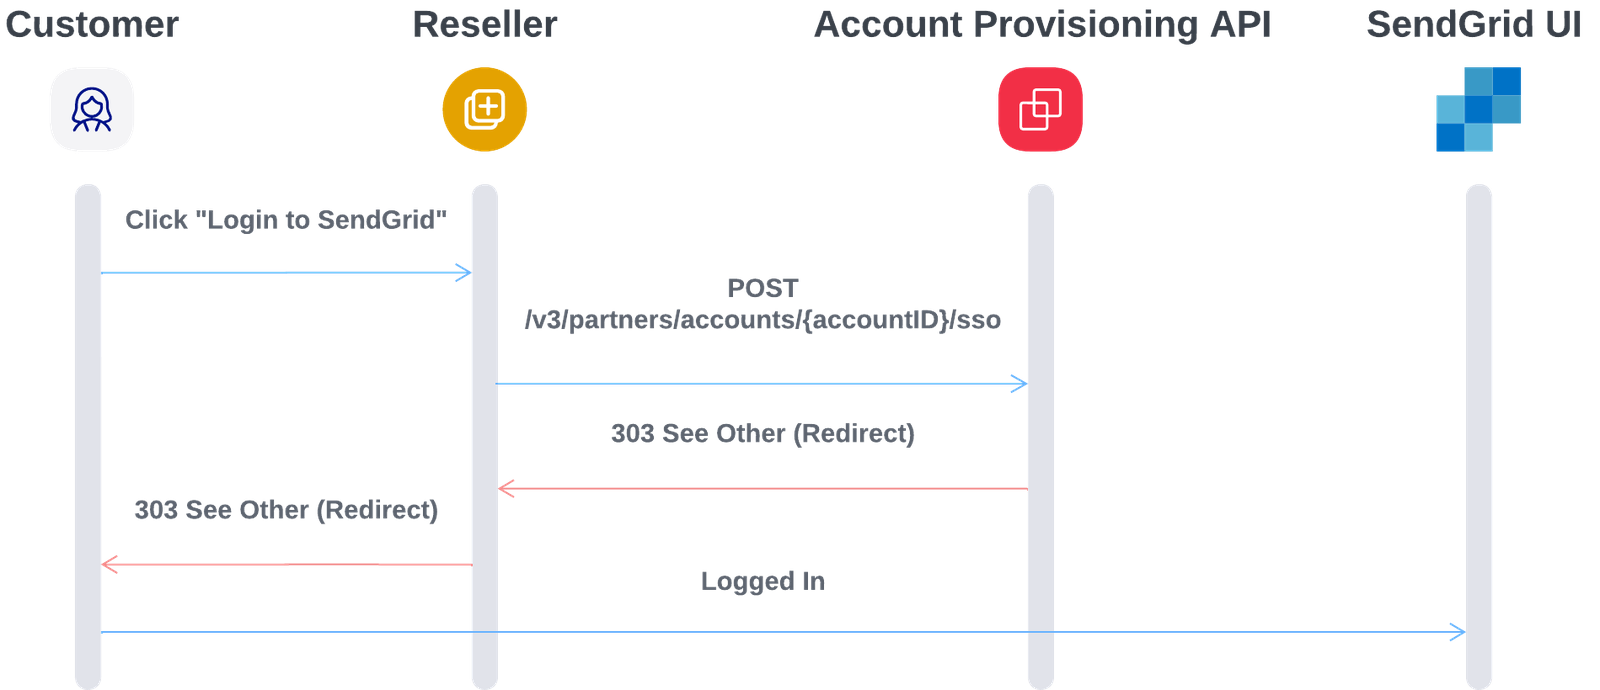 Account Provisioning API SSO authentication flow.